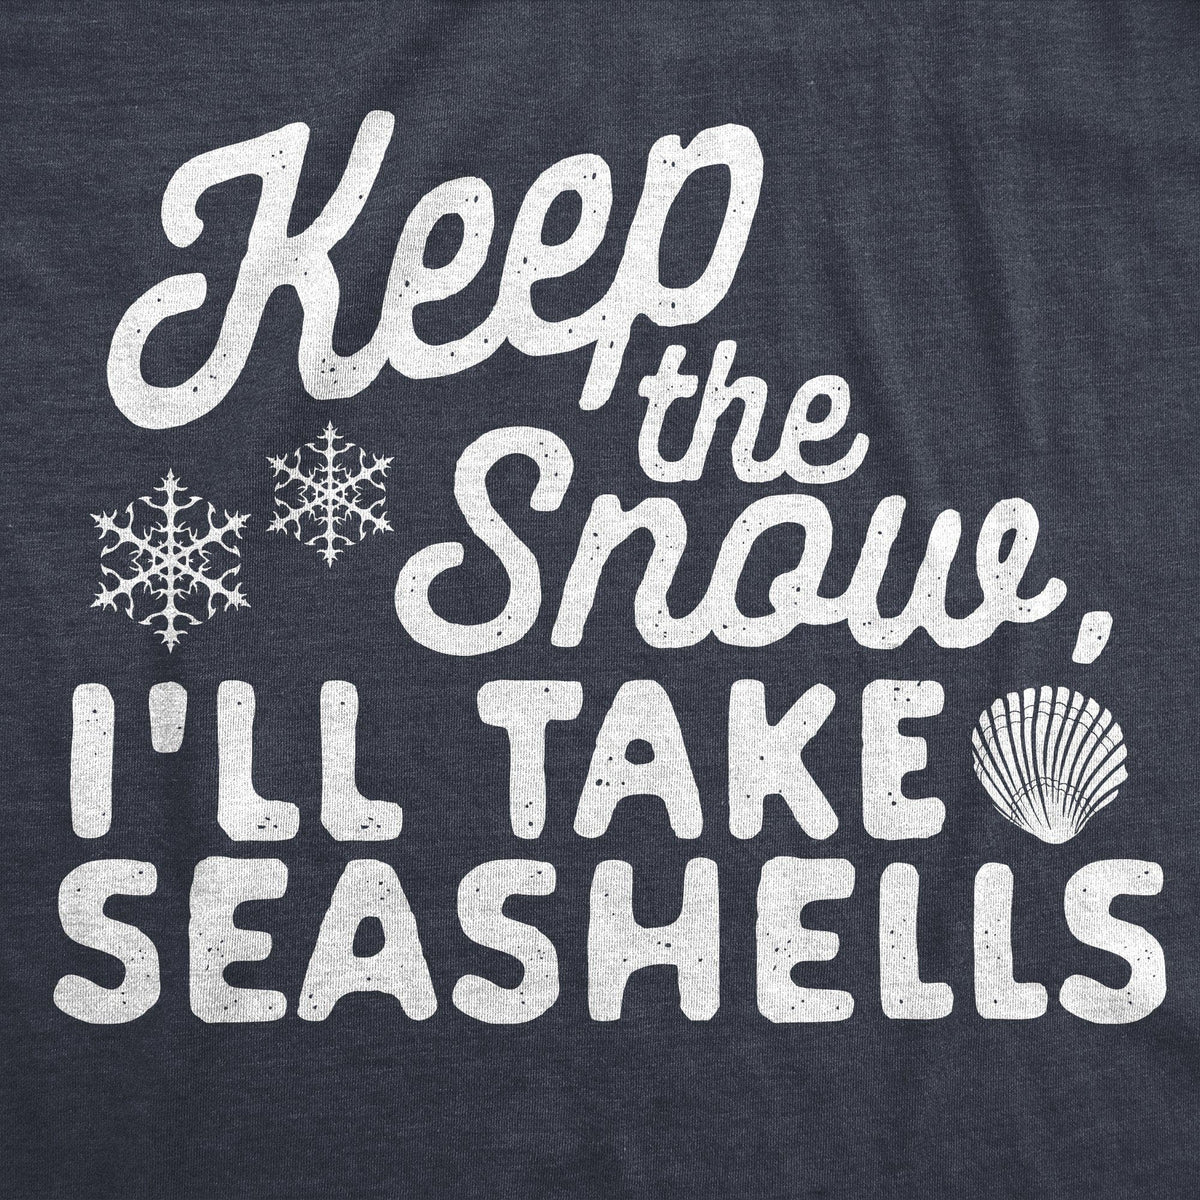 Keep The Snow, I&#39;ll Take The Seashells Women&#39;s Tshirt - Crazy Dog T-Shirts